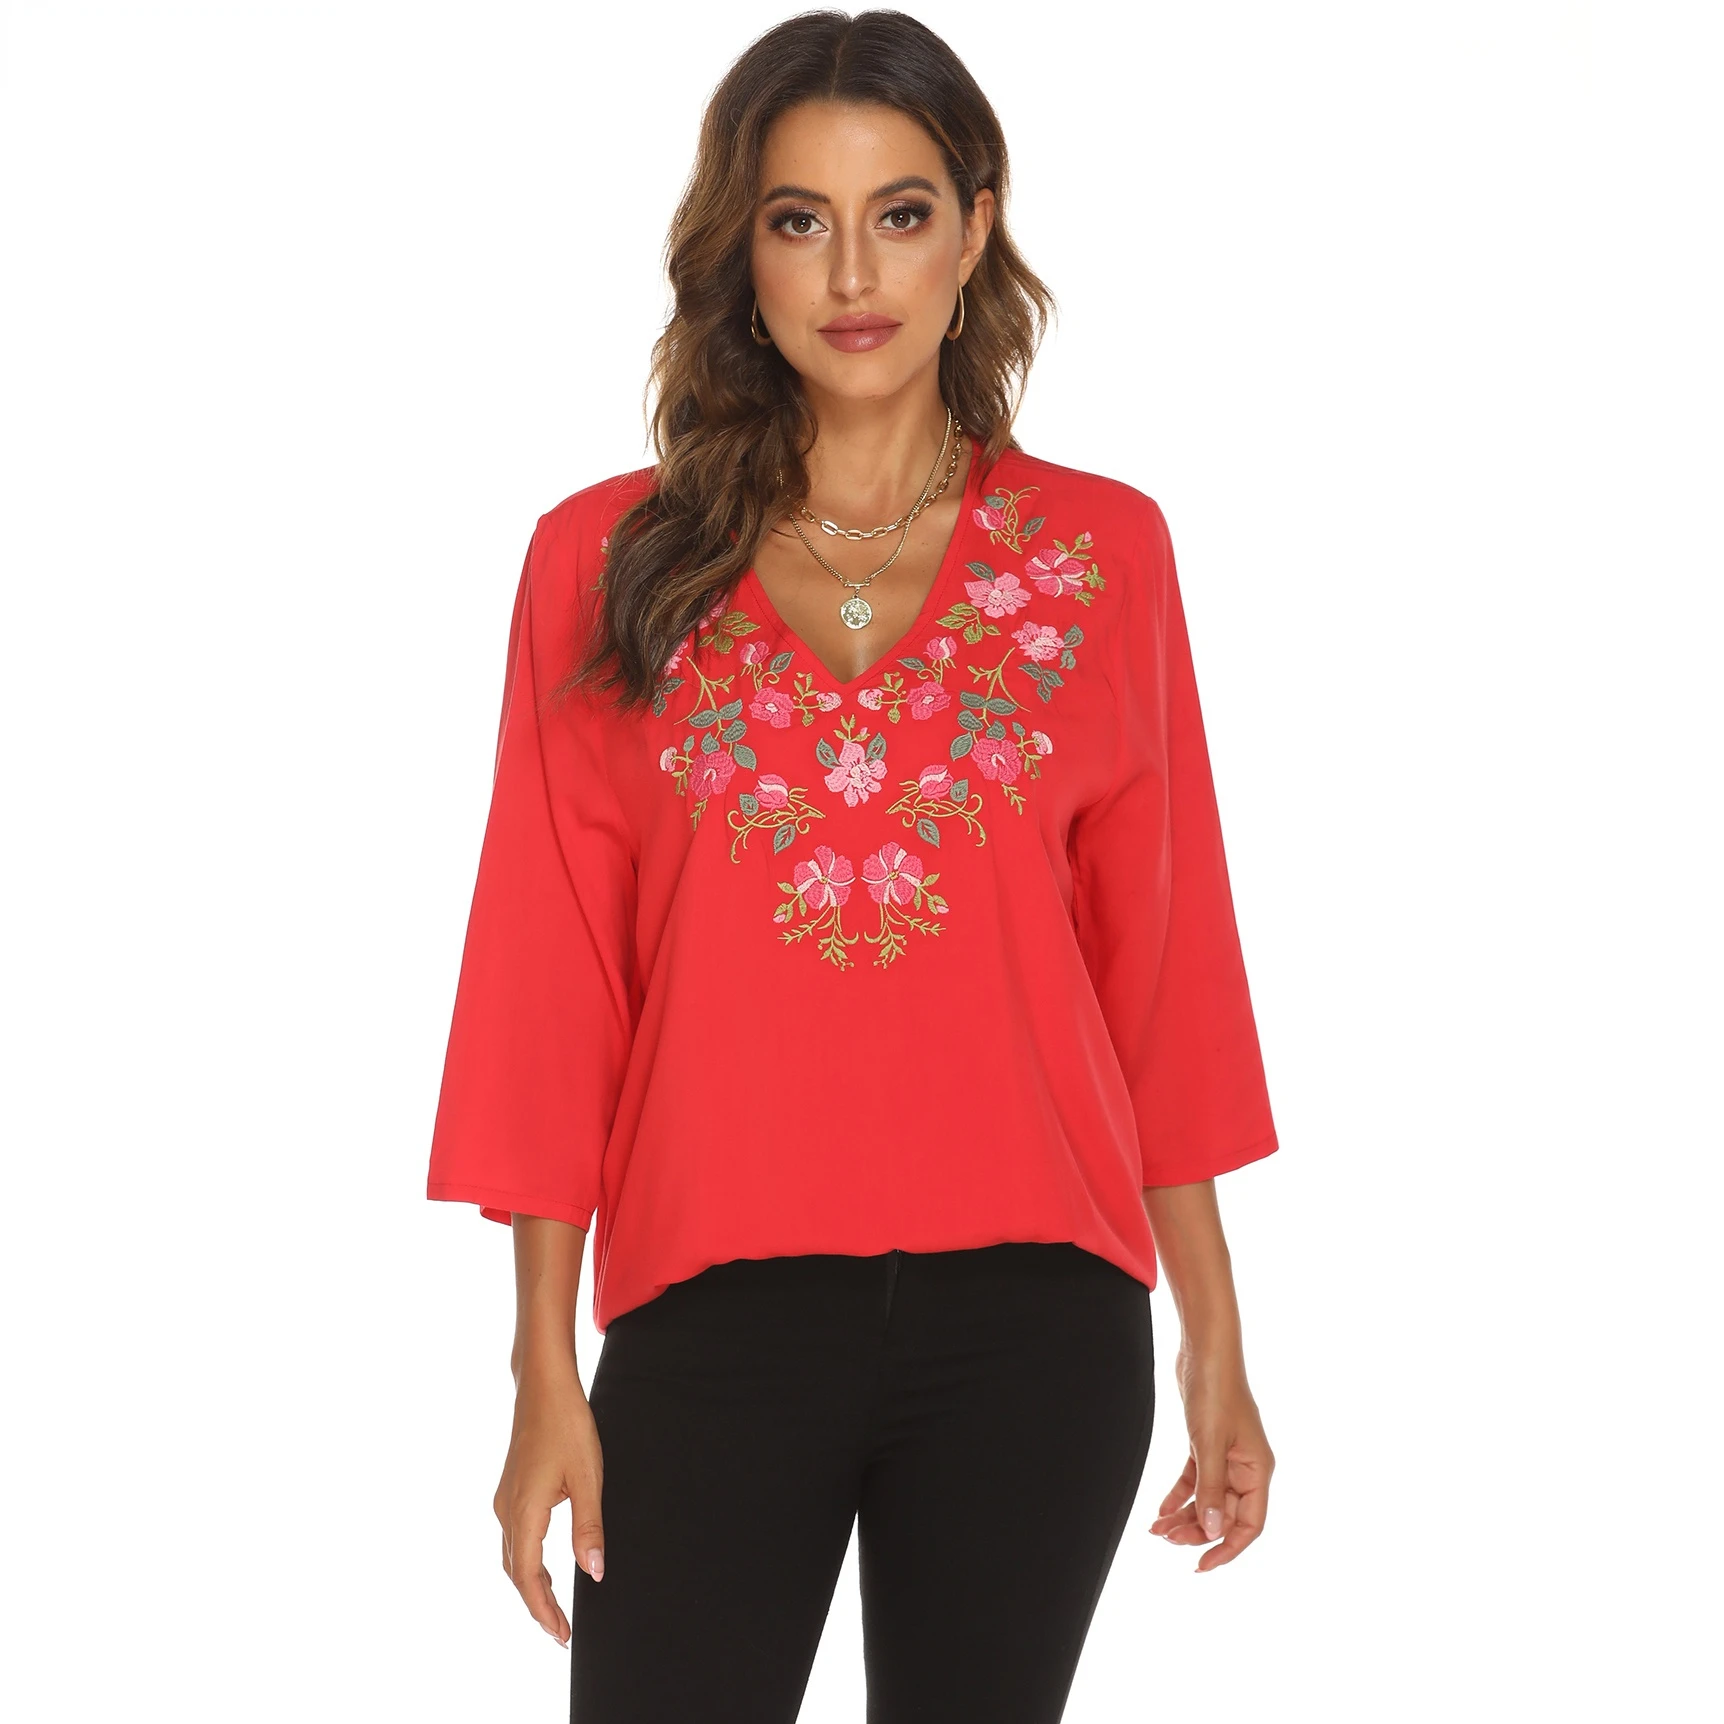 

Le Luz Floral Embroidery Blouse Shirts 100% Cotton Red Boho Vintage Mexican Blouse V-neck Women 2xl 3XL Ladies Ethnic Tops